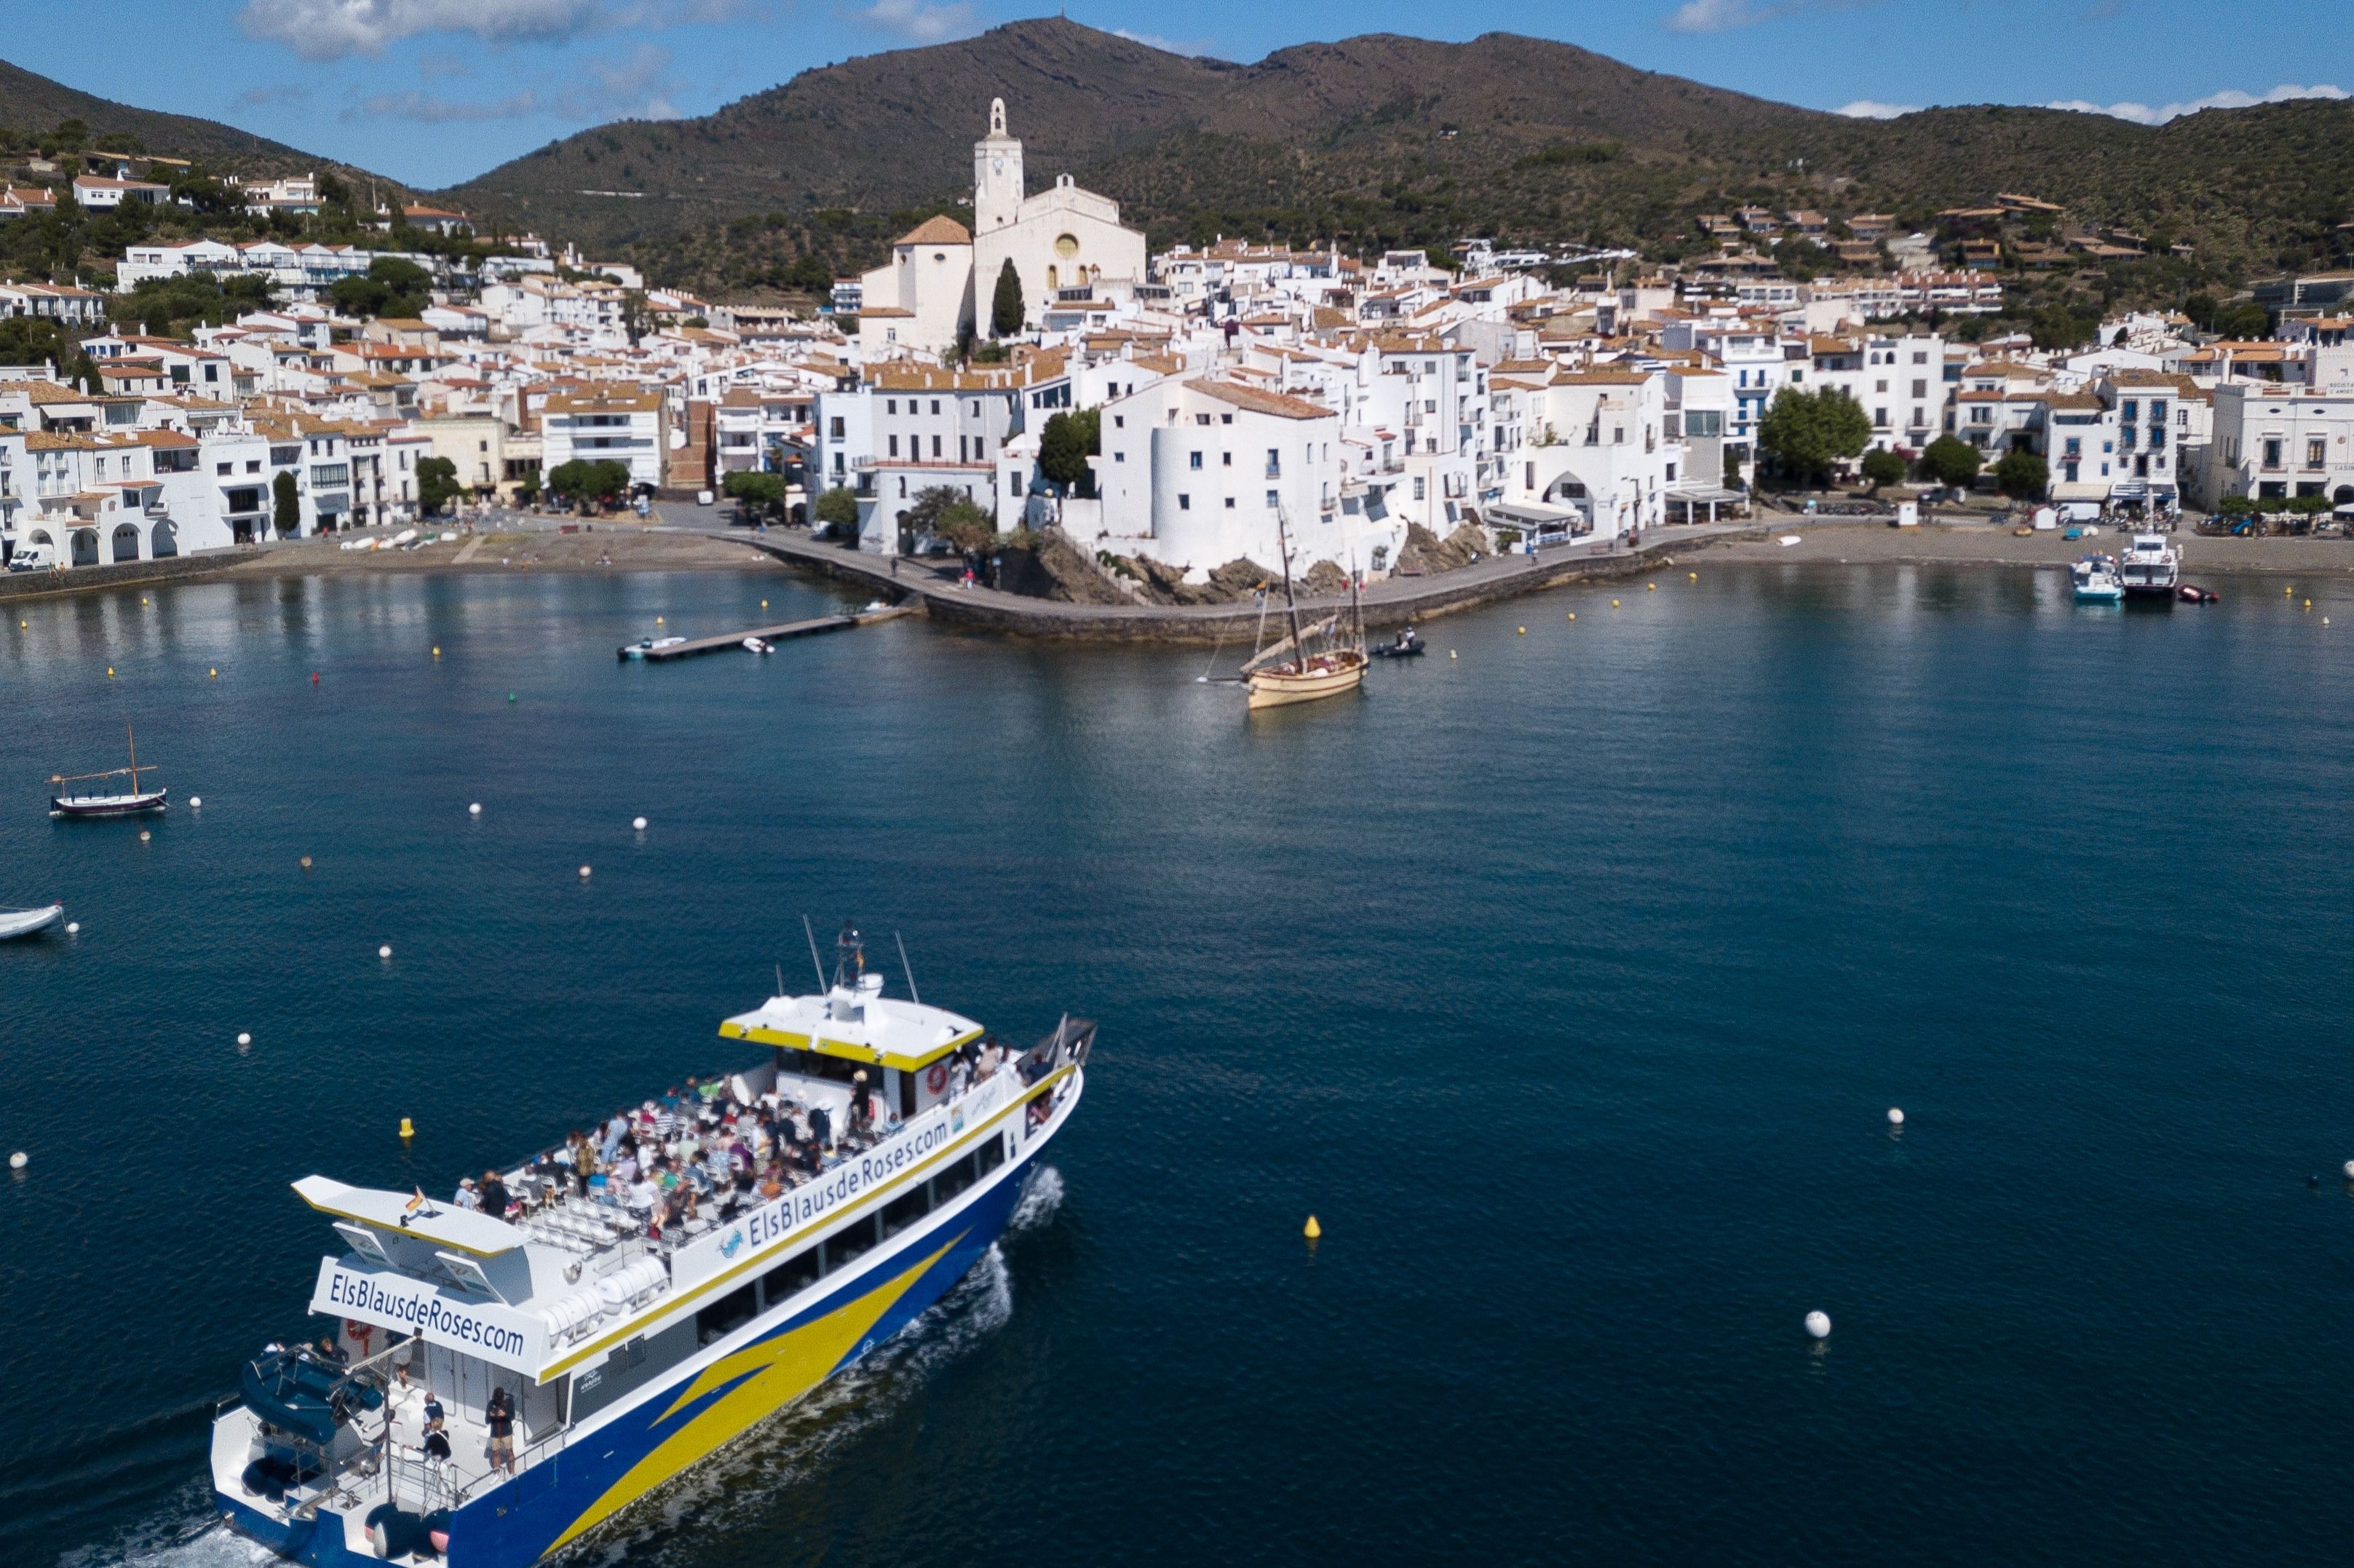 Imagen del tour: Excursión en barco a Cadaqués desde Roses con parada de 1,5 horas